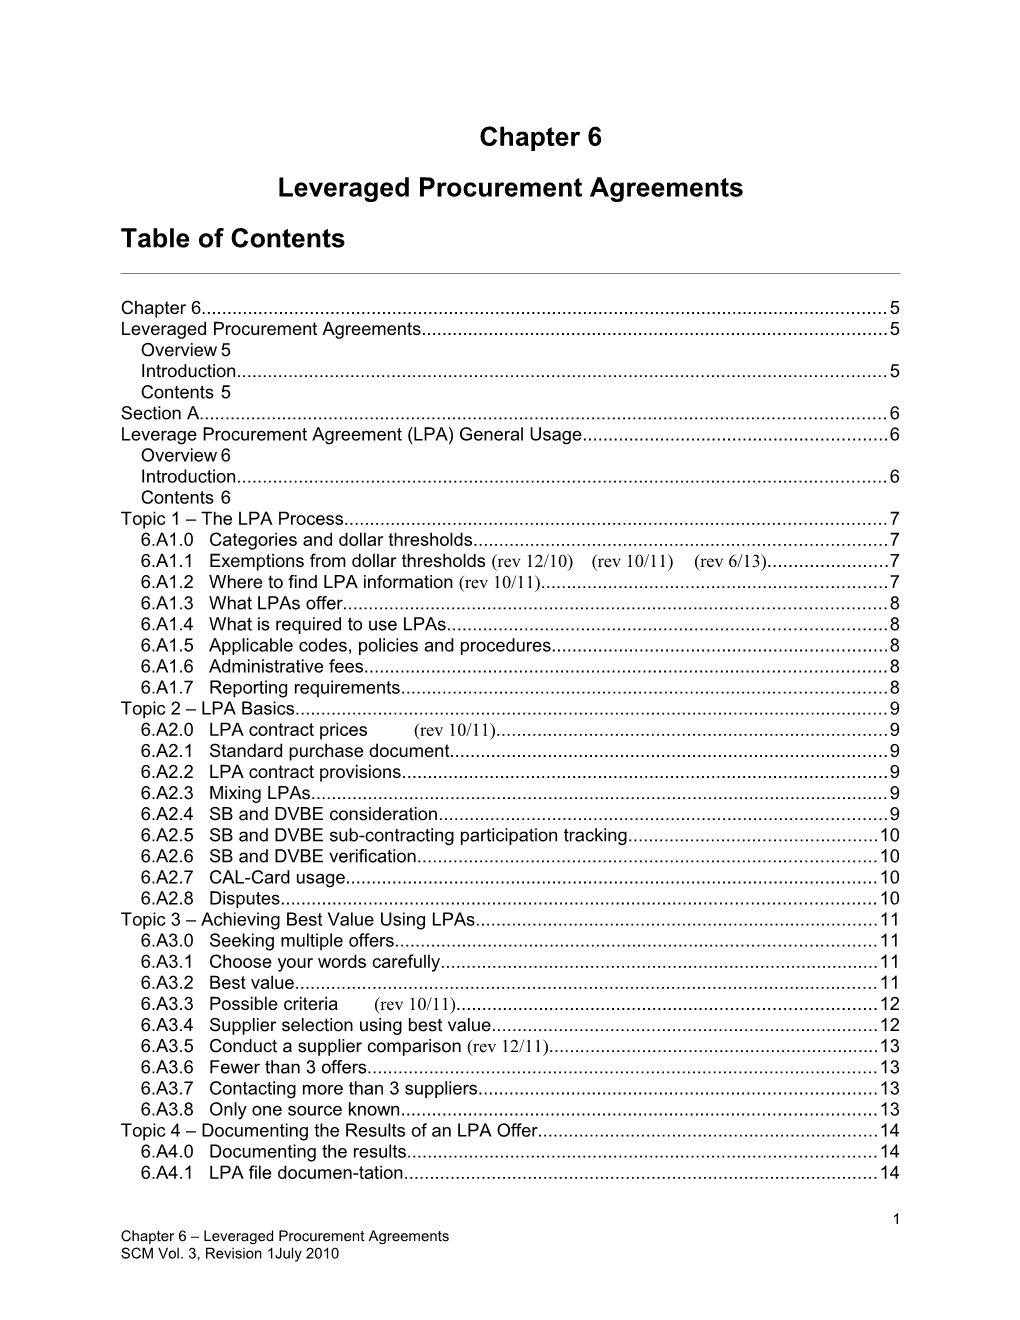 Leveraged Procurement Agreements